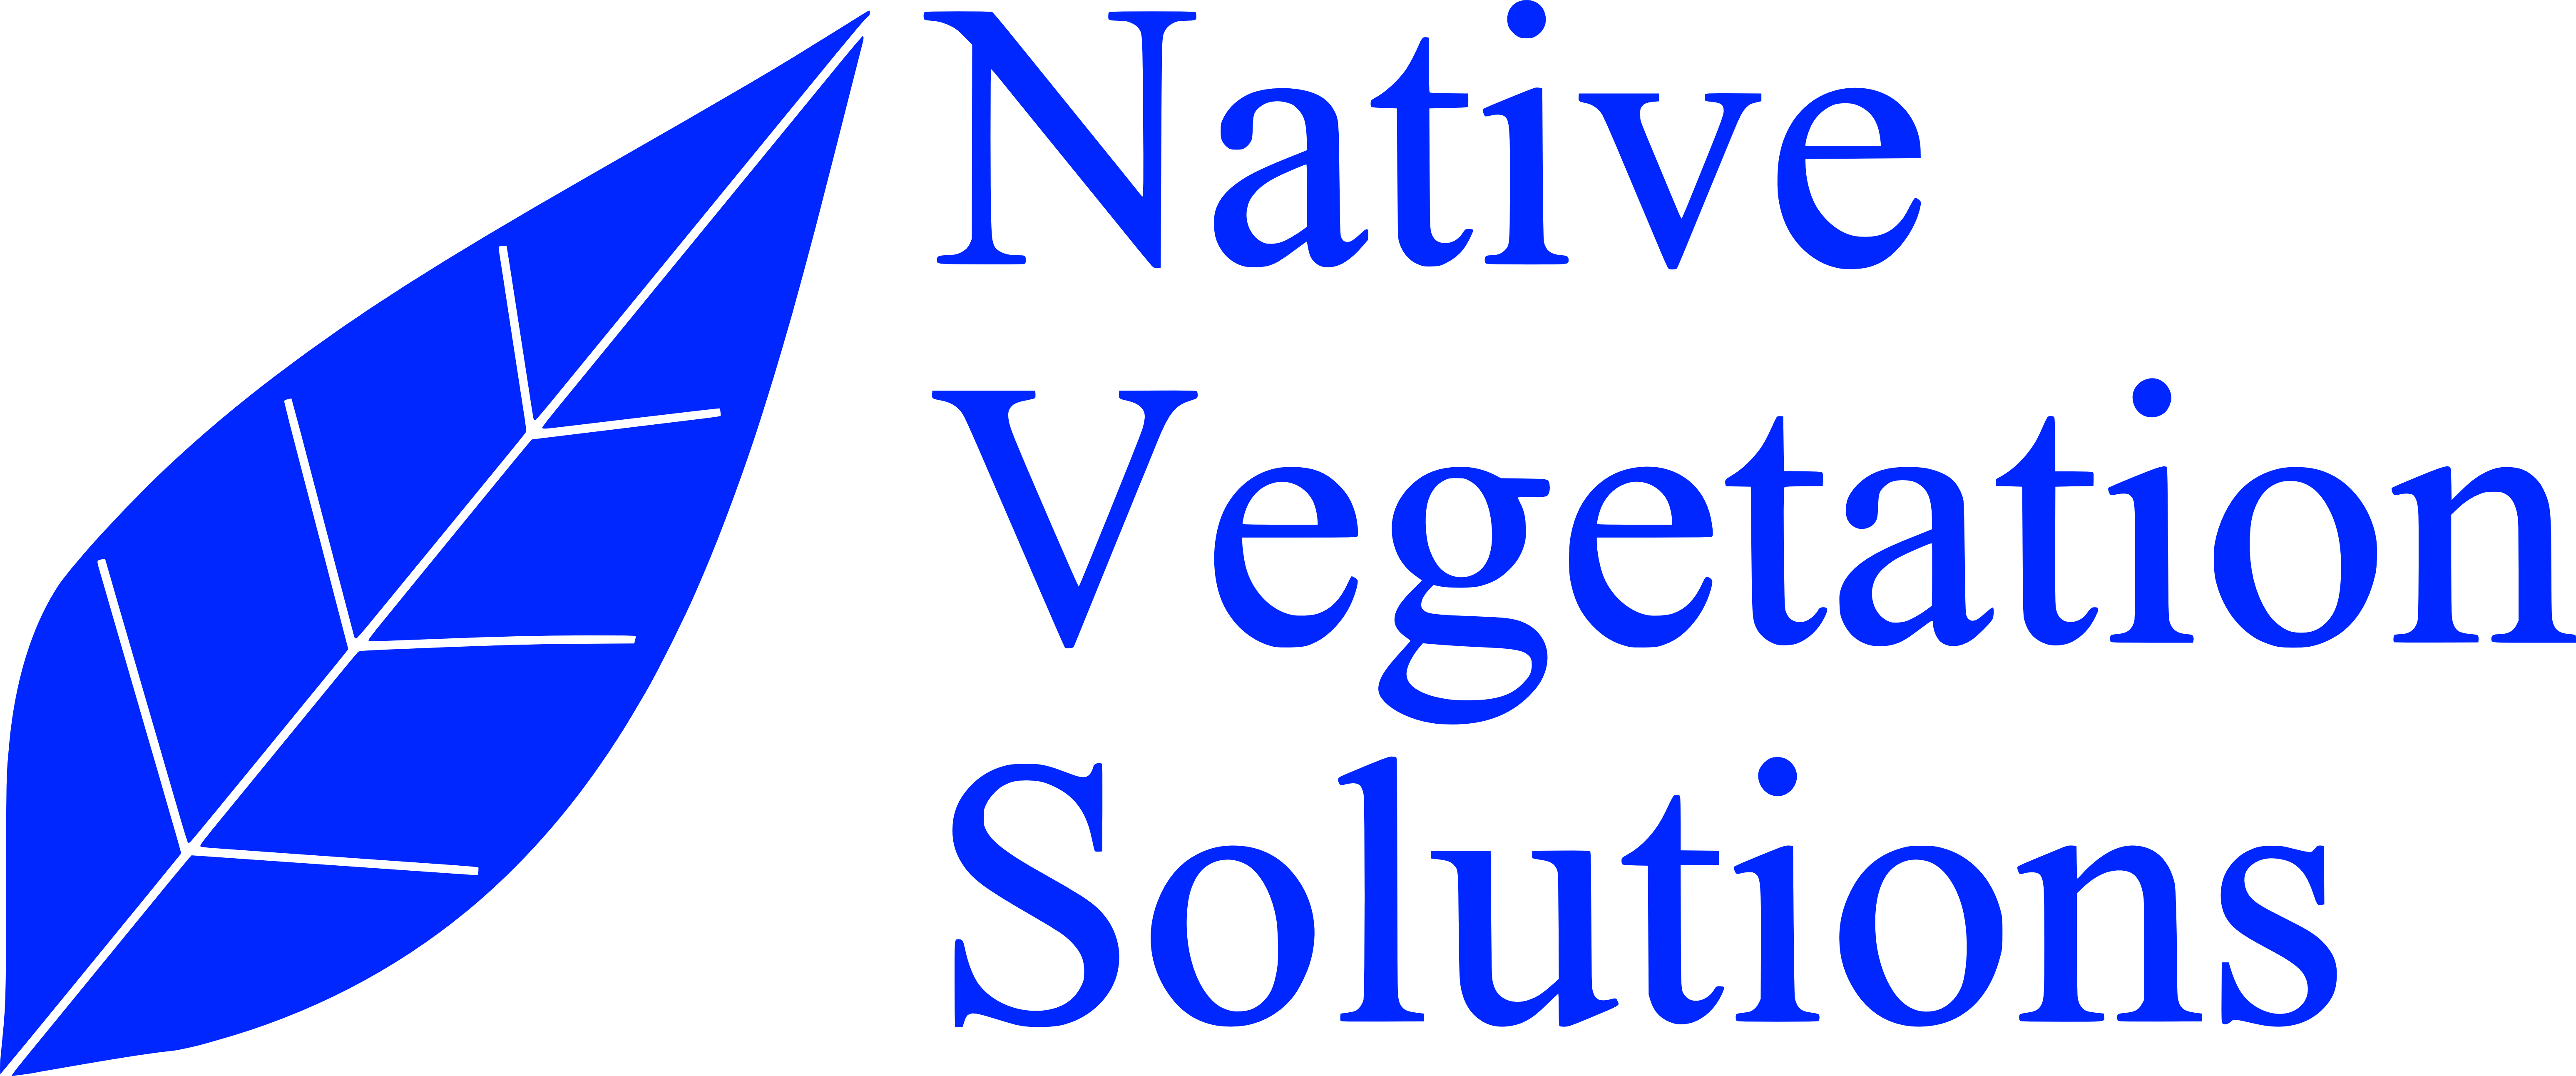 Native Vegetation Solutions